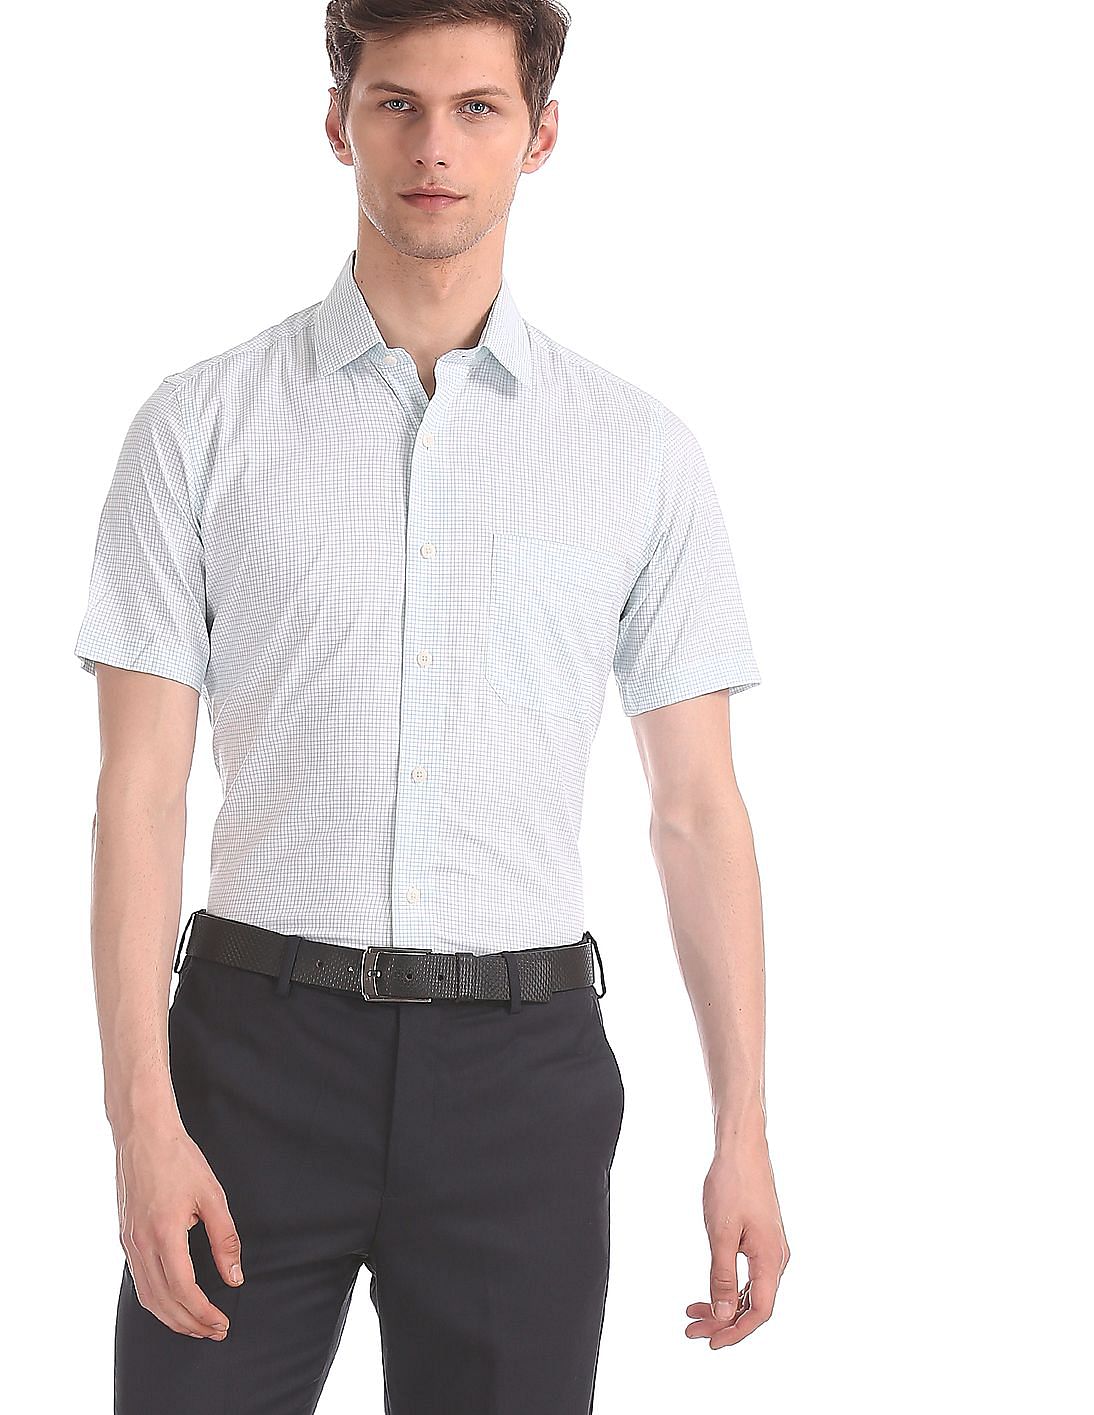 Buy Men White Regular Fit Short Sleeve Shirt online at NNNOW.com